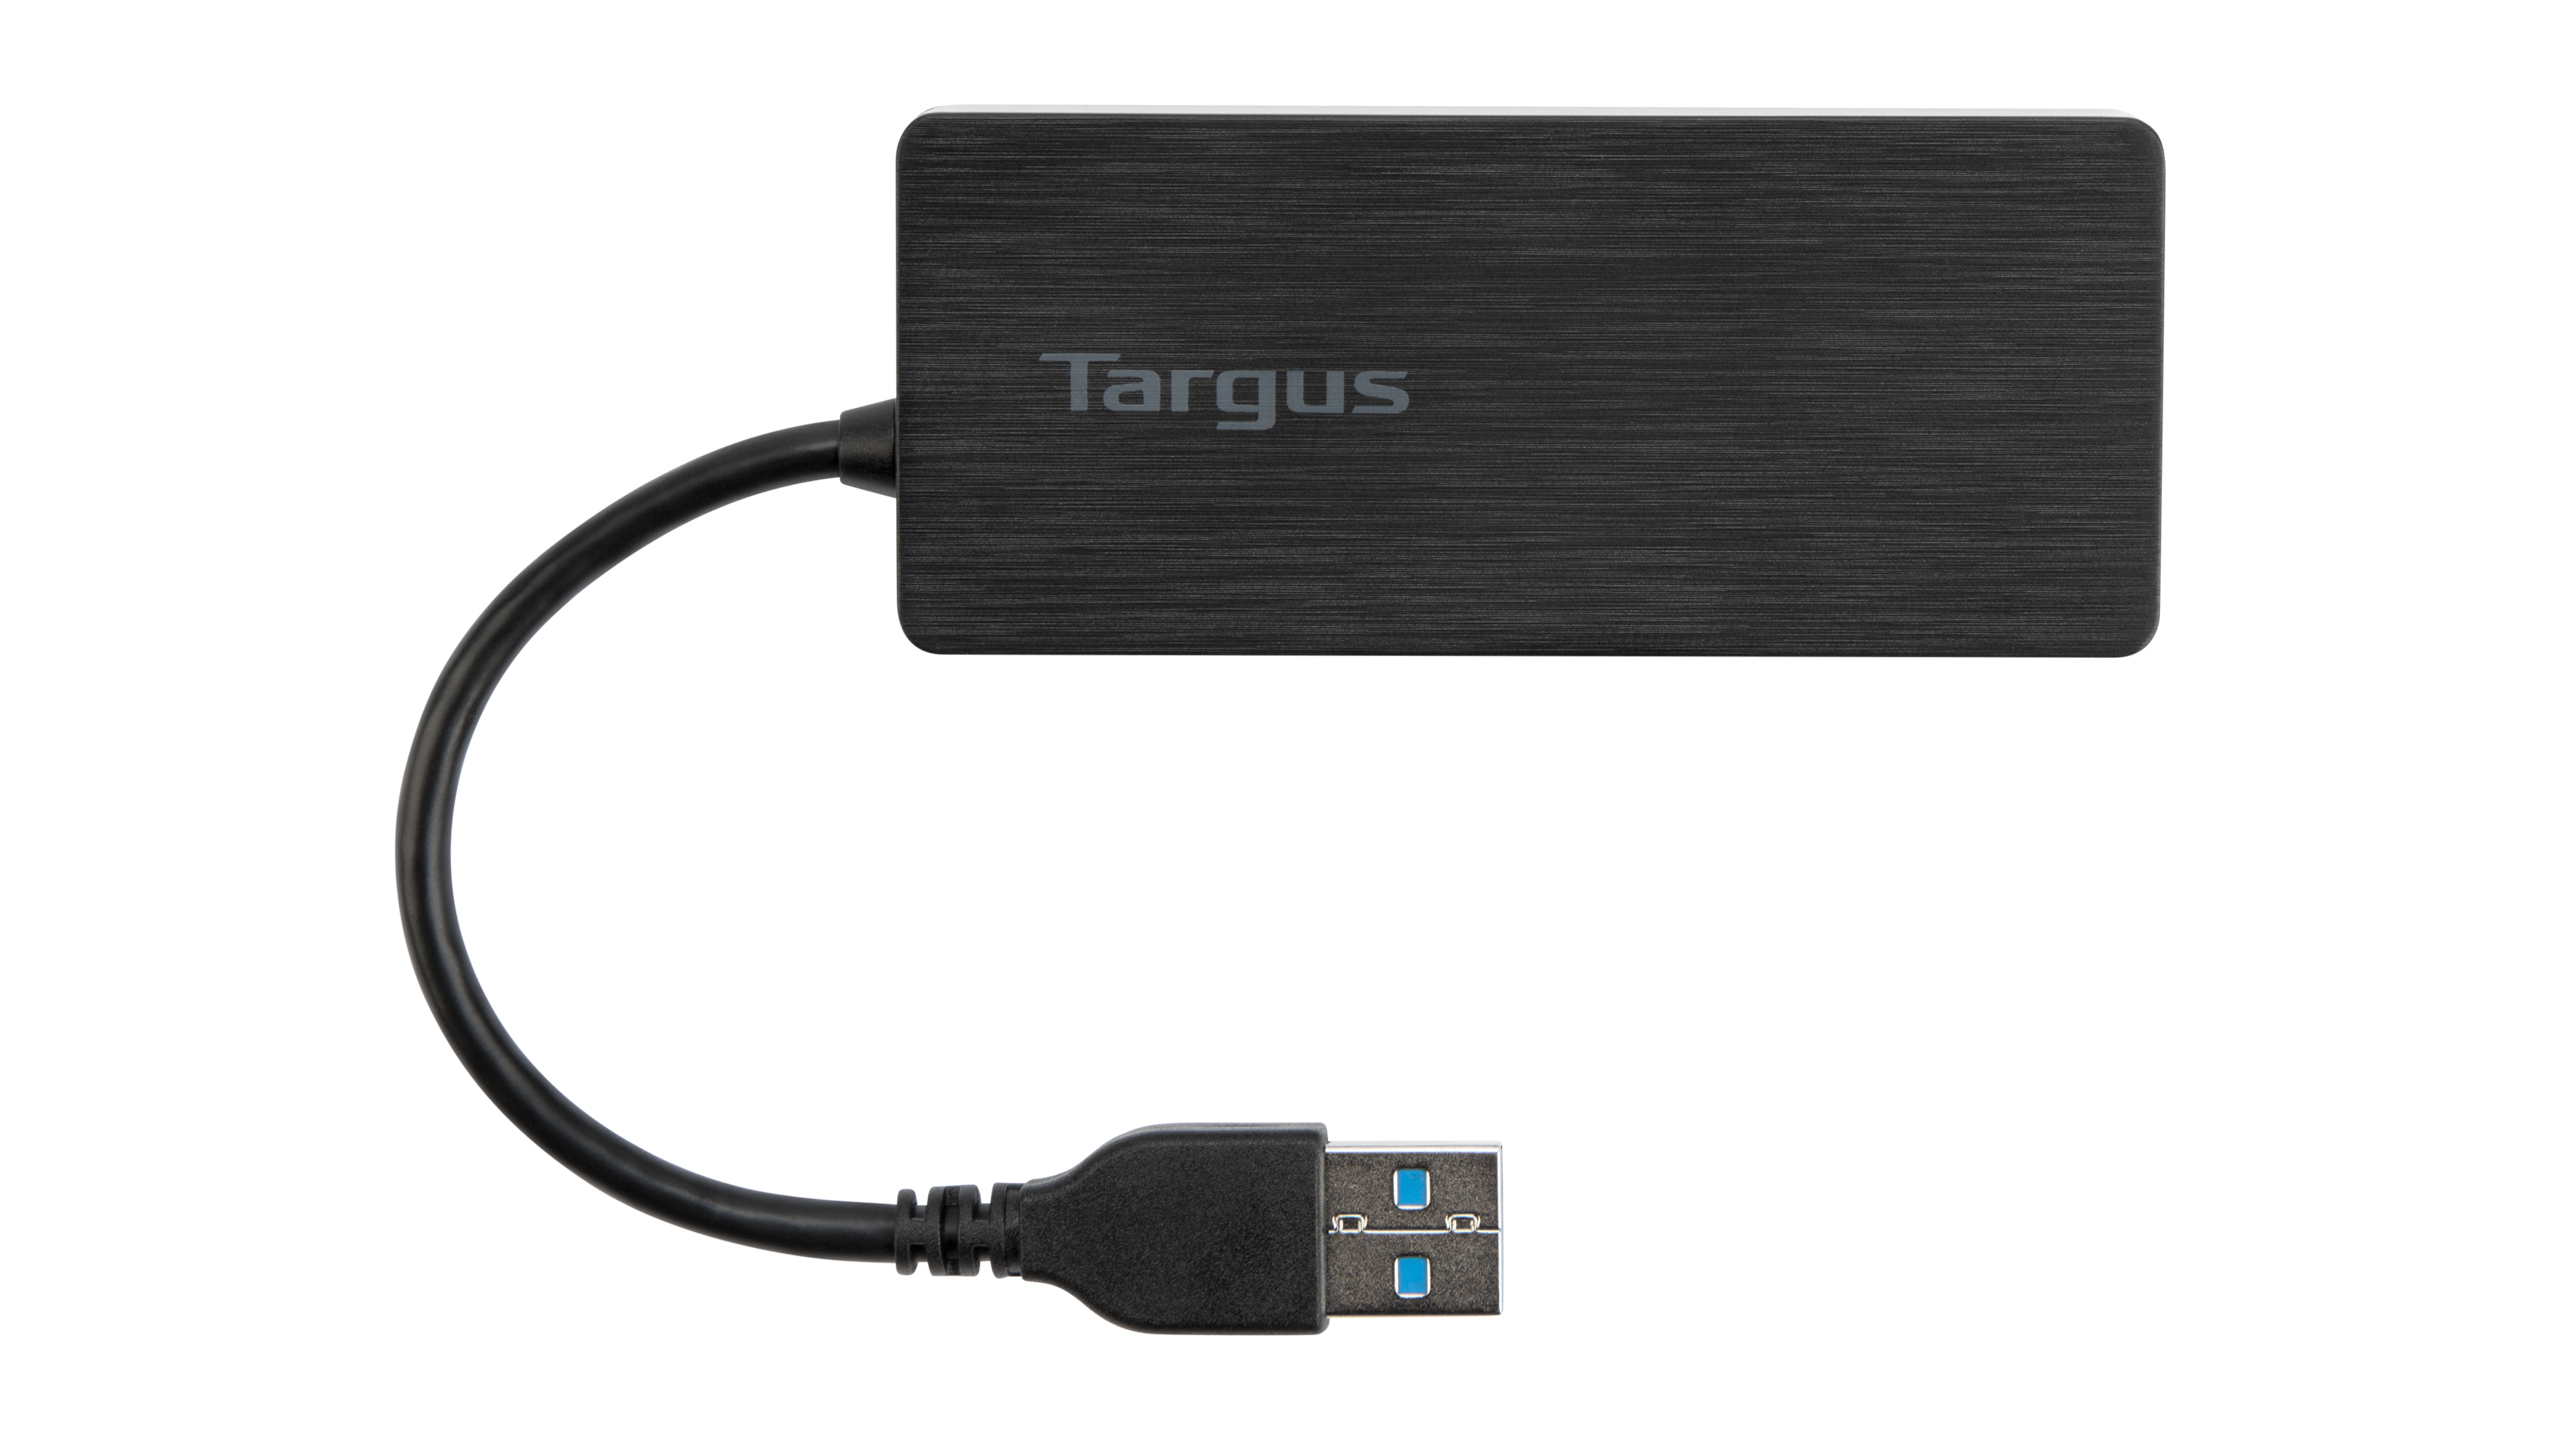 targus usb bluetooth 4.0 adapter driver